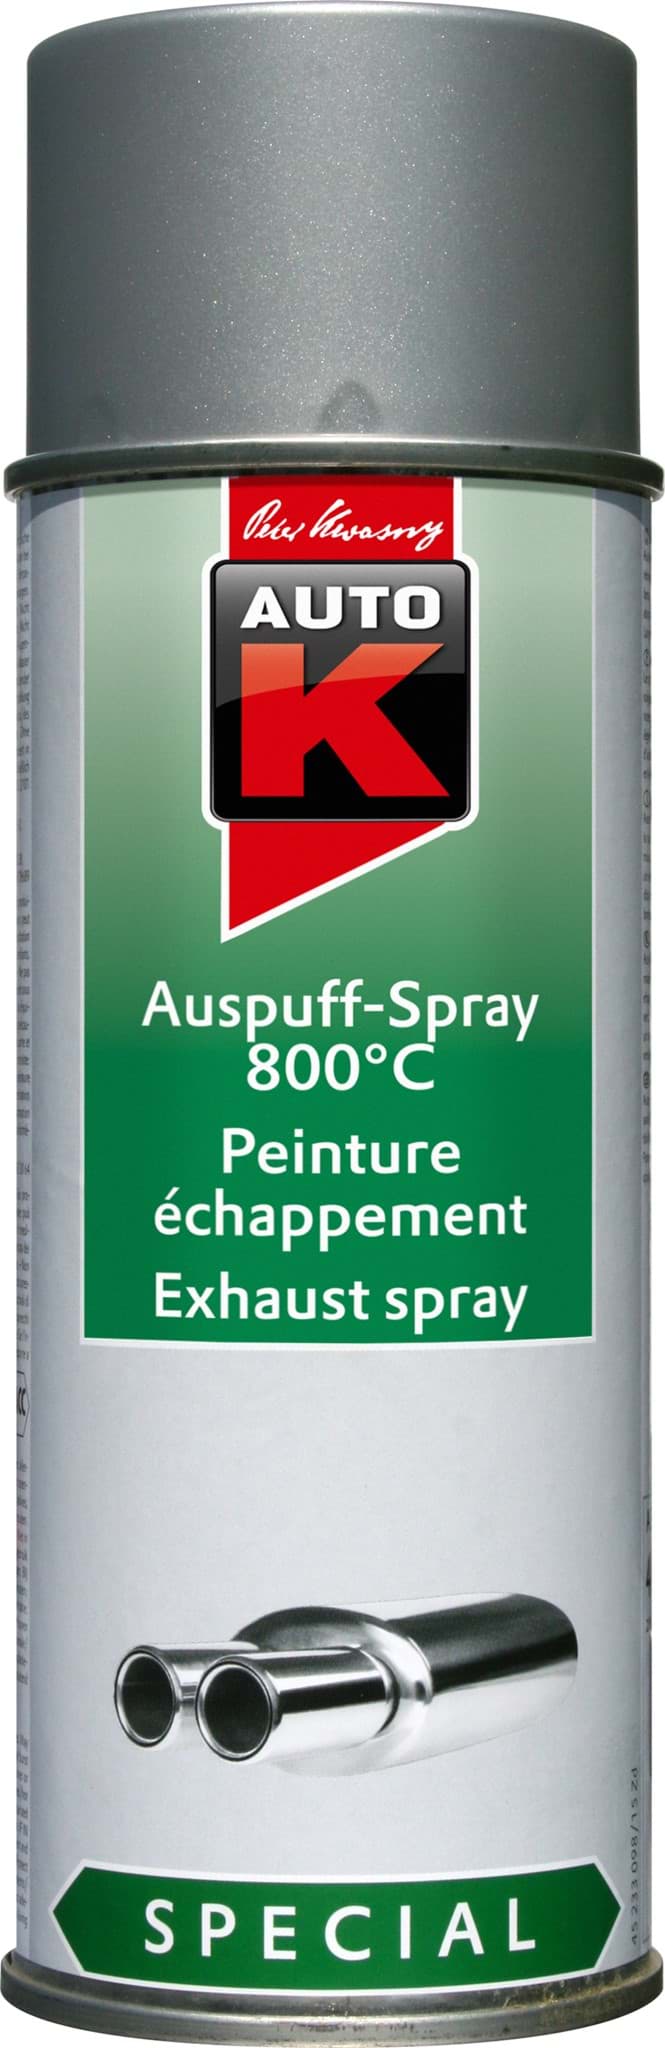 AutoK Auspuff Spray 800C° silber 400ml 233098  resmi